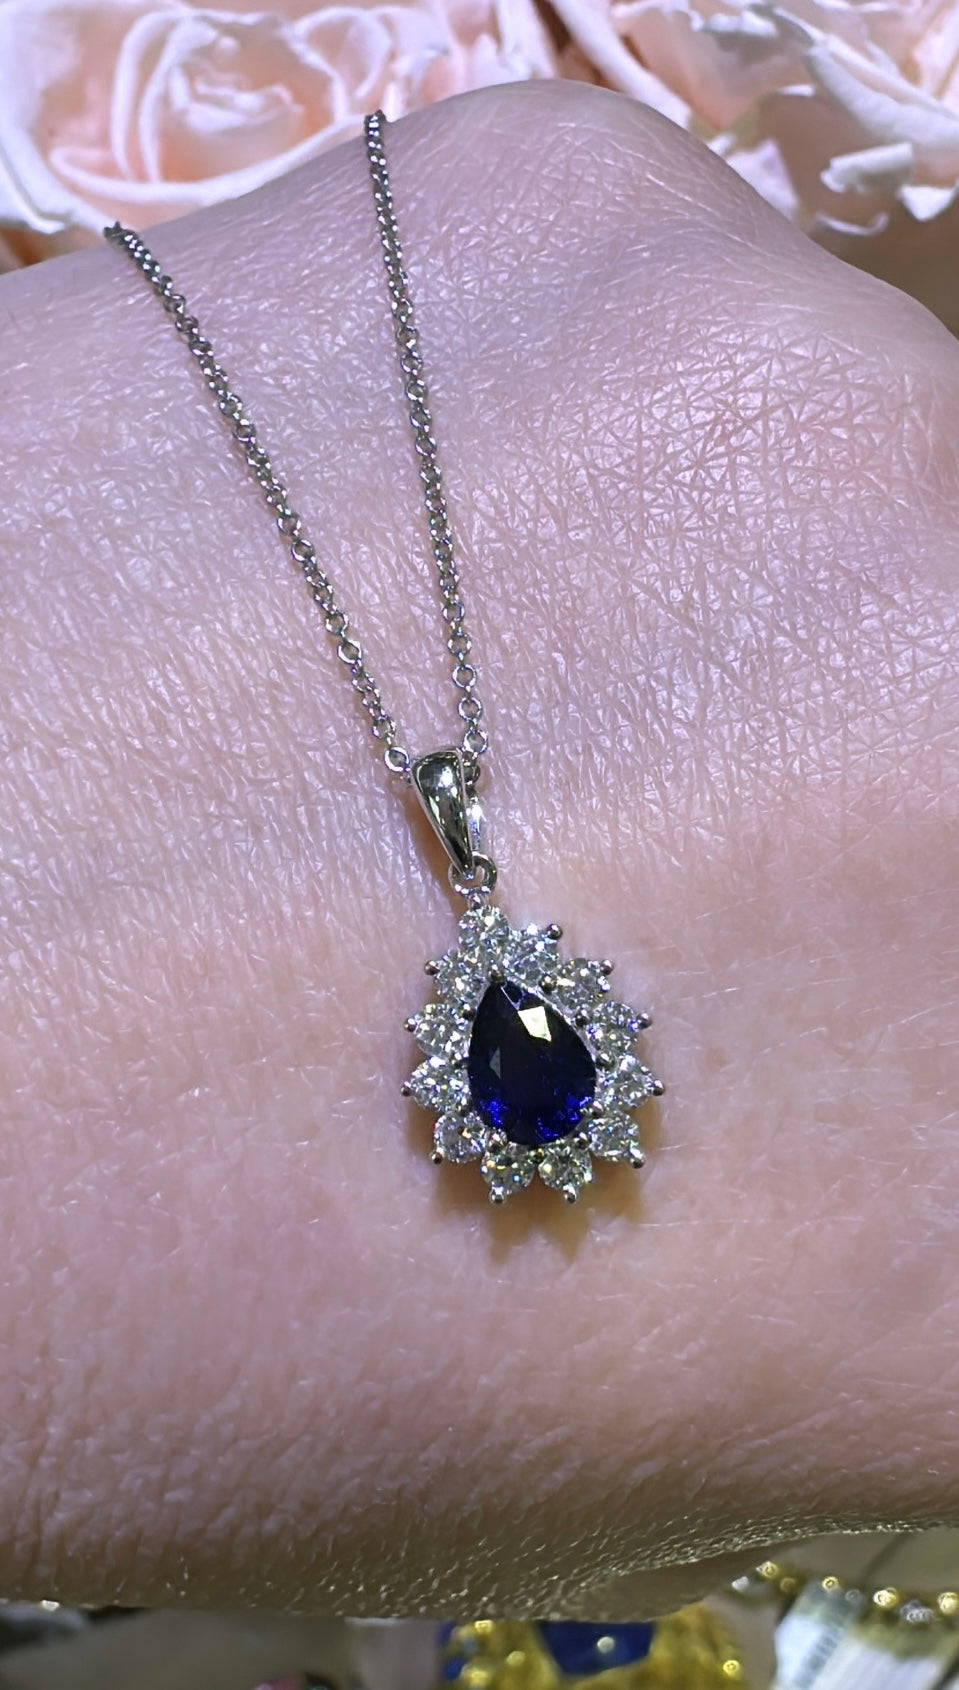 1.23carat Diamond Blue Sapphire Pendant Necklace